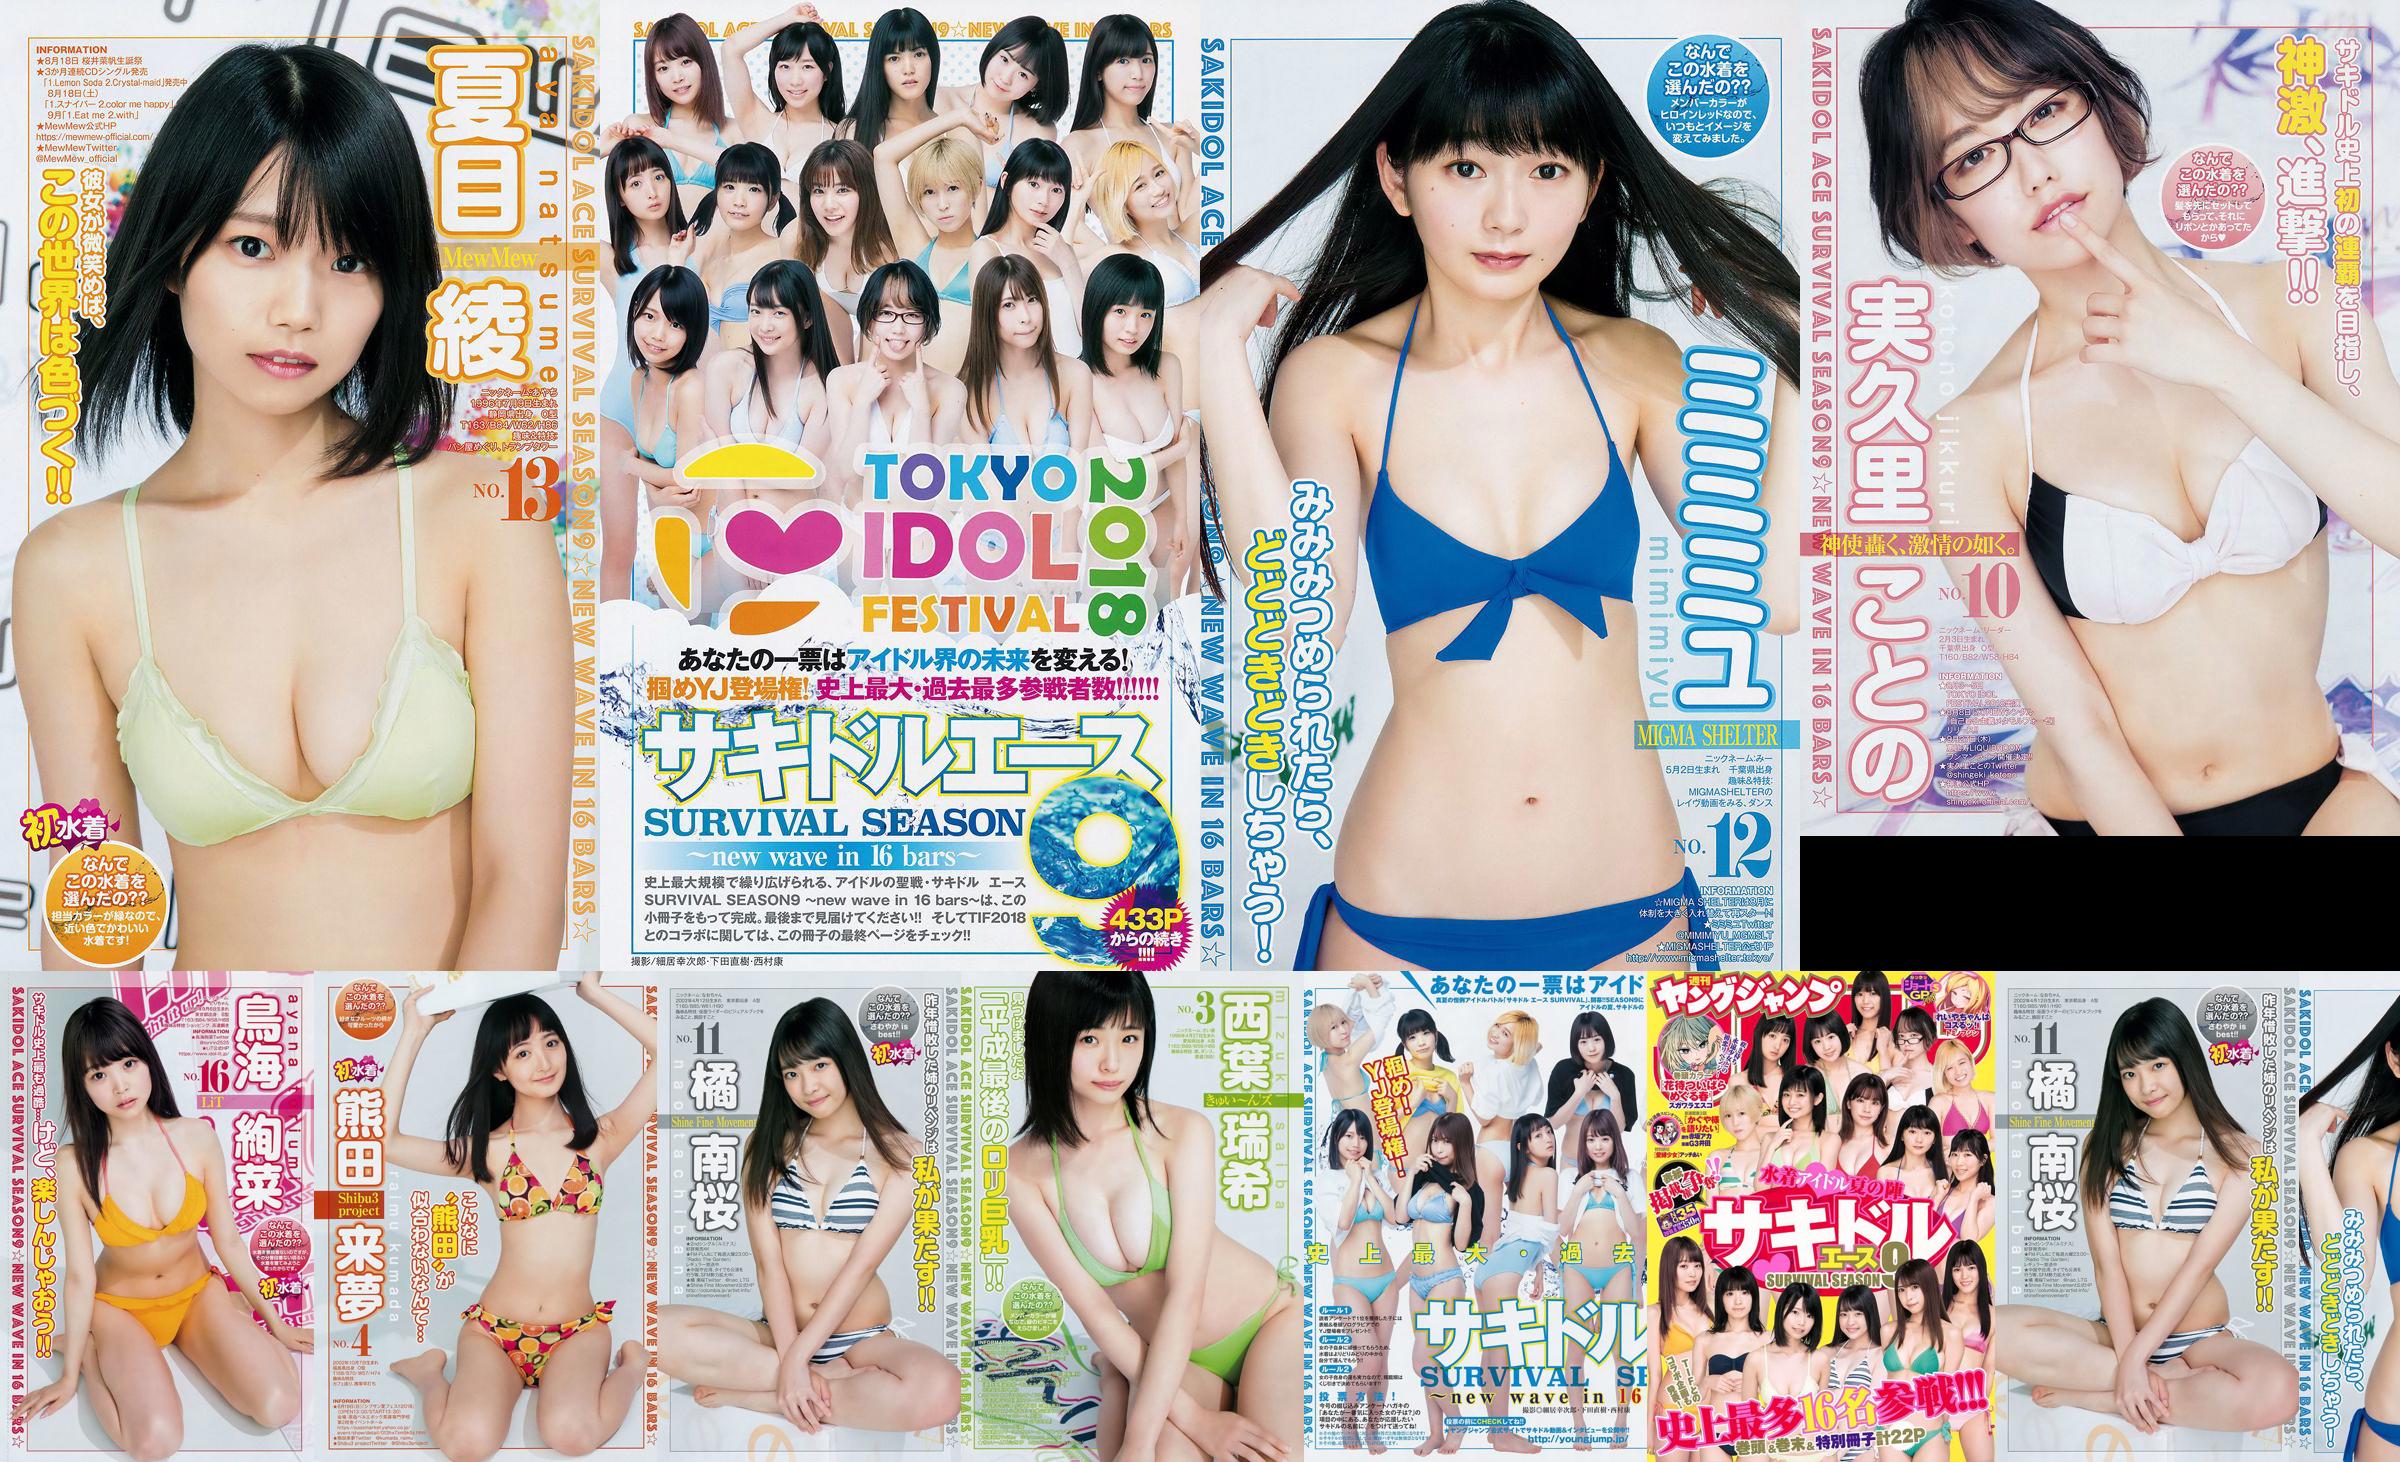 [FLASH] Ikumi Hisamatsu Risa Hirako Ren Ishikawa Angel Moe AKB48 Kaho Shibuya Misuzu Hayashi Ririka 2015.04.21 Photo Toshi No.dd8802 Page 11